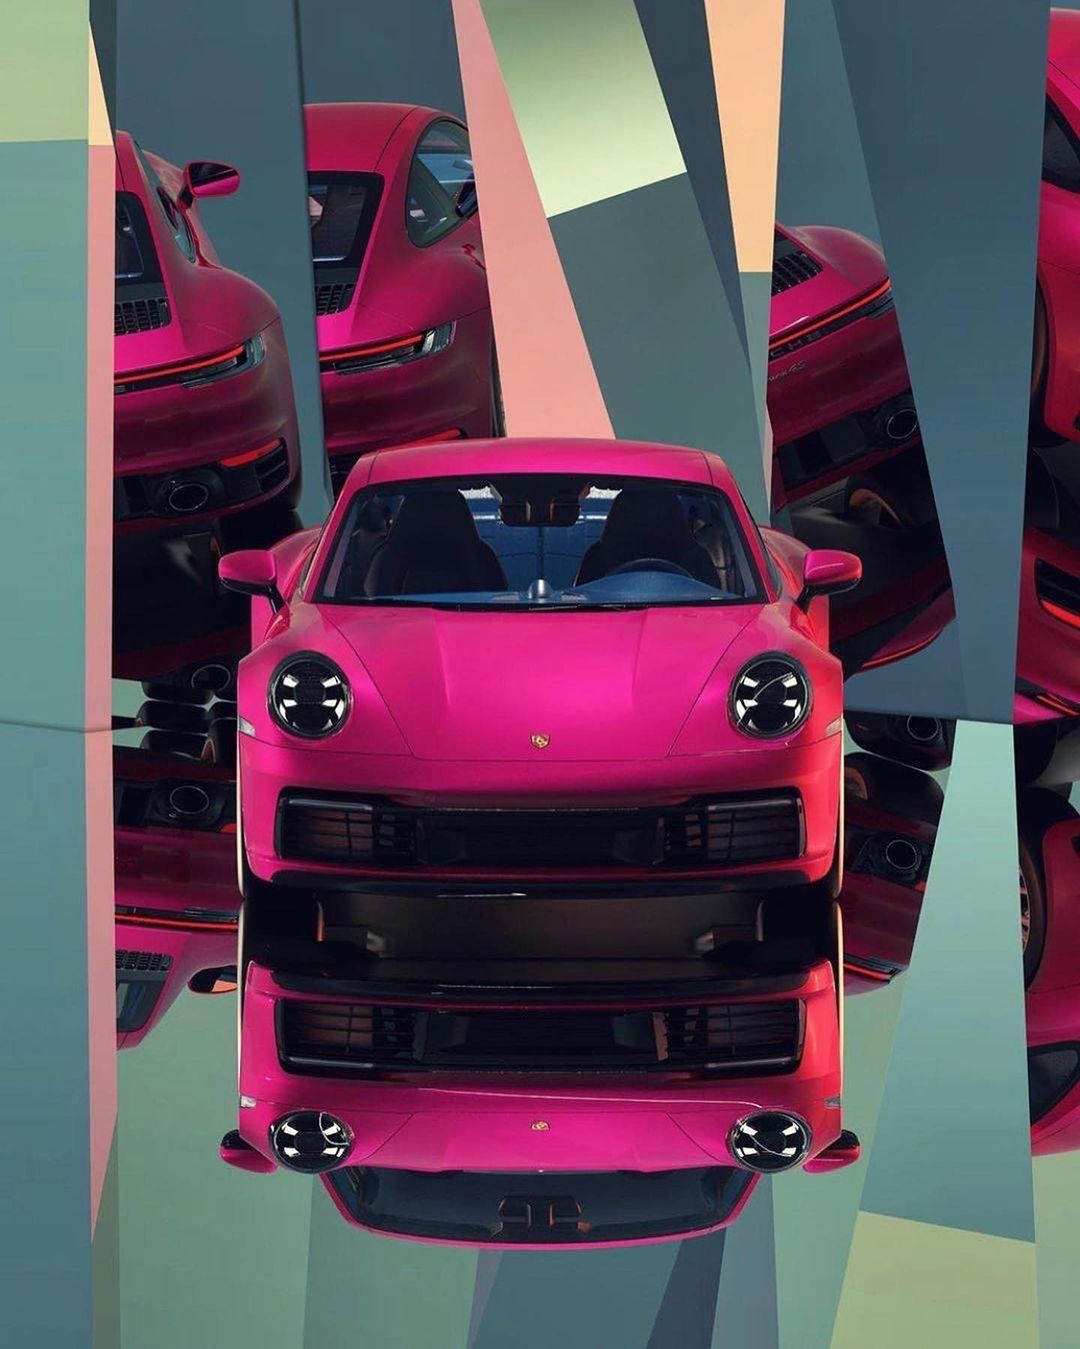 Kaleidoscopic fuchsia pink Porsche reflected in cubist style